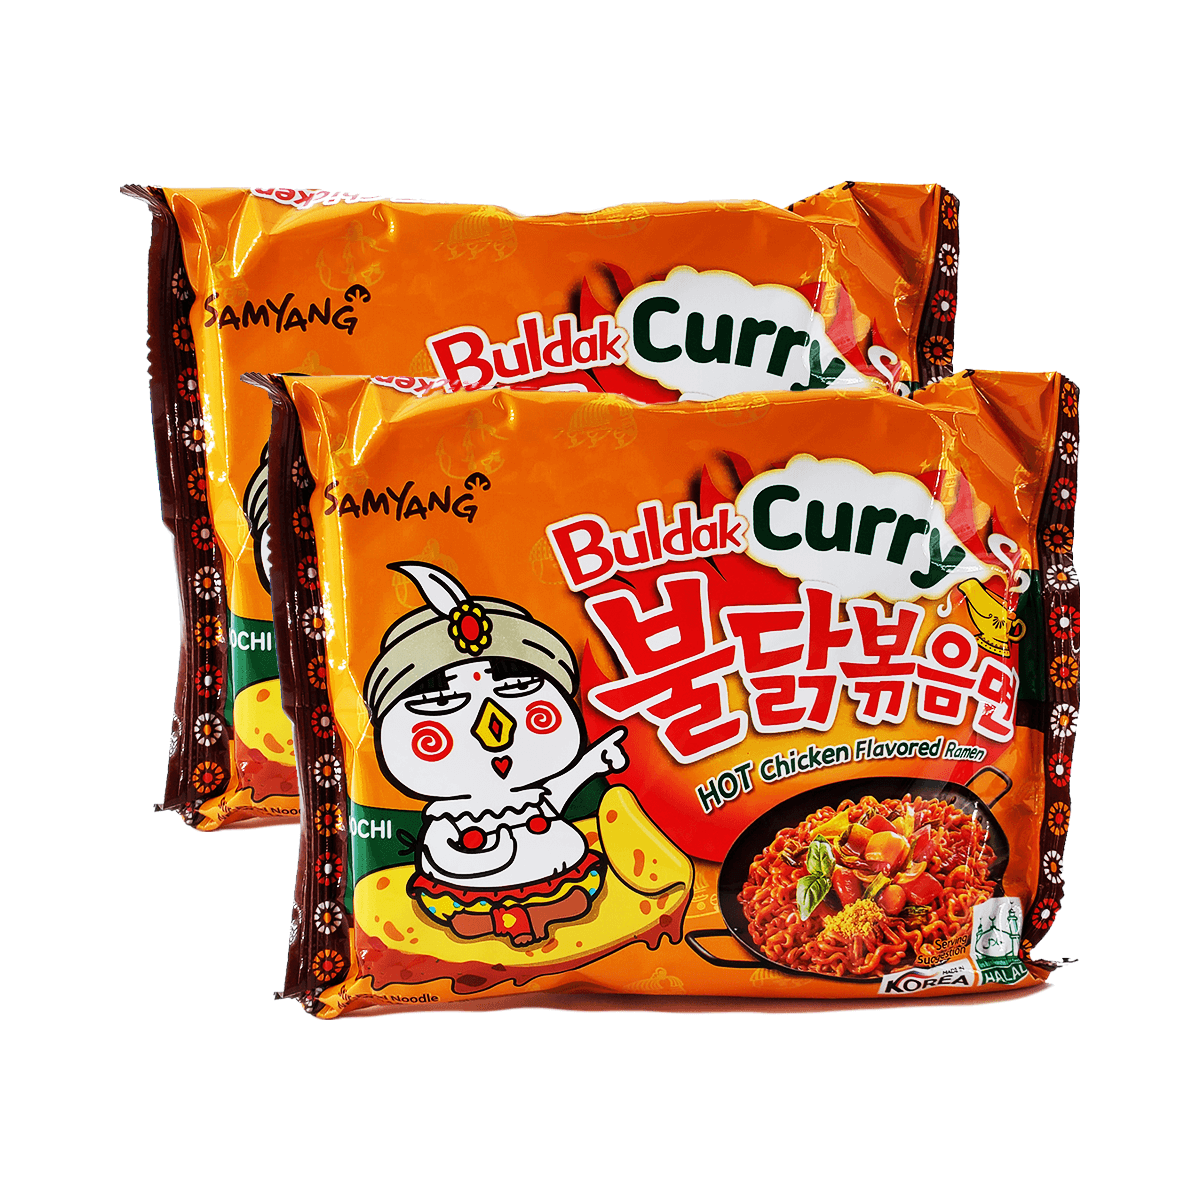 Samyang Buldak Curry Hot Chicken Flavored Ramen Single pack Twins 9.88 ...